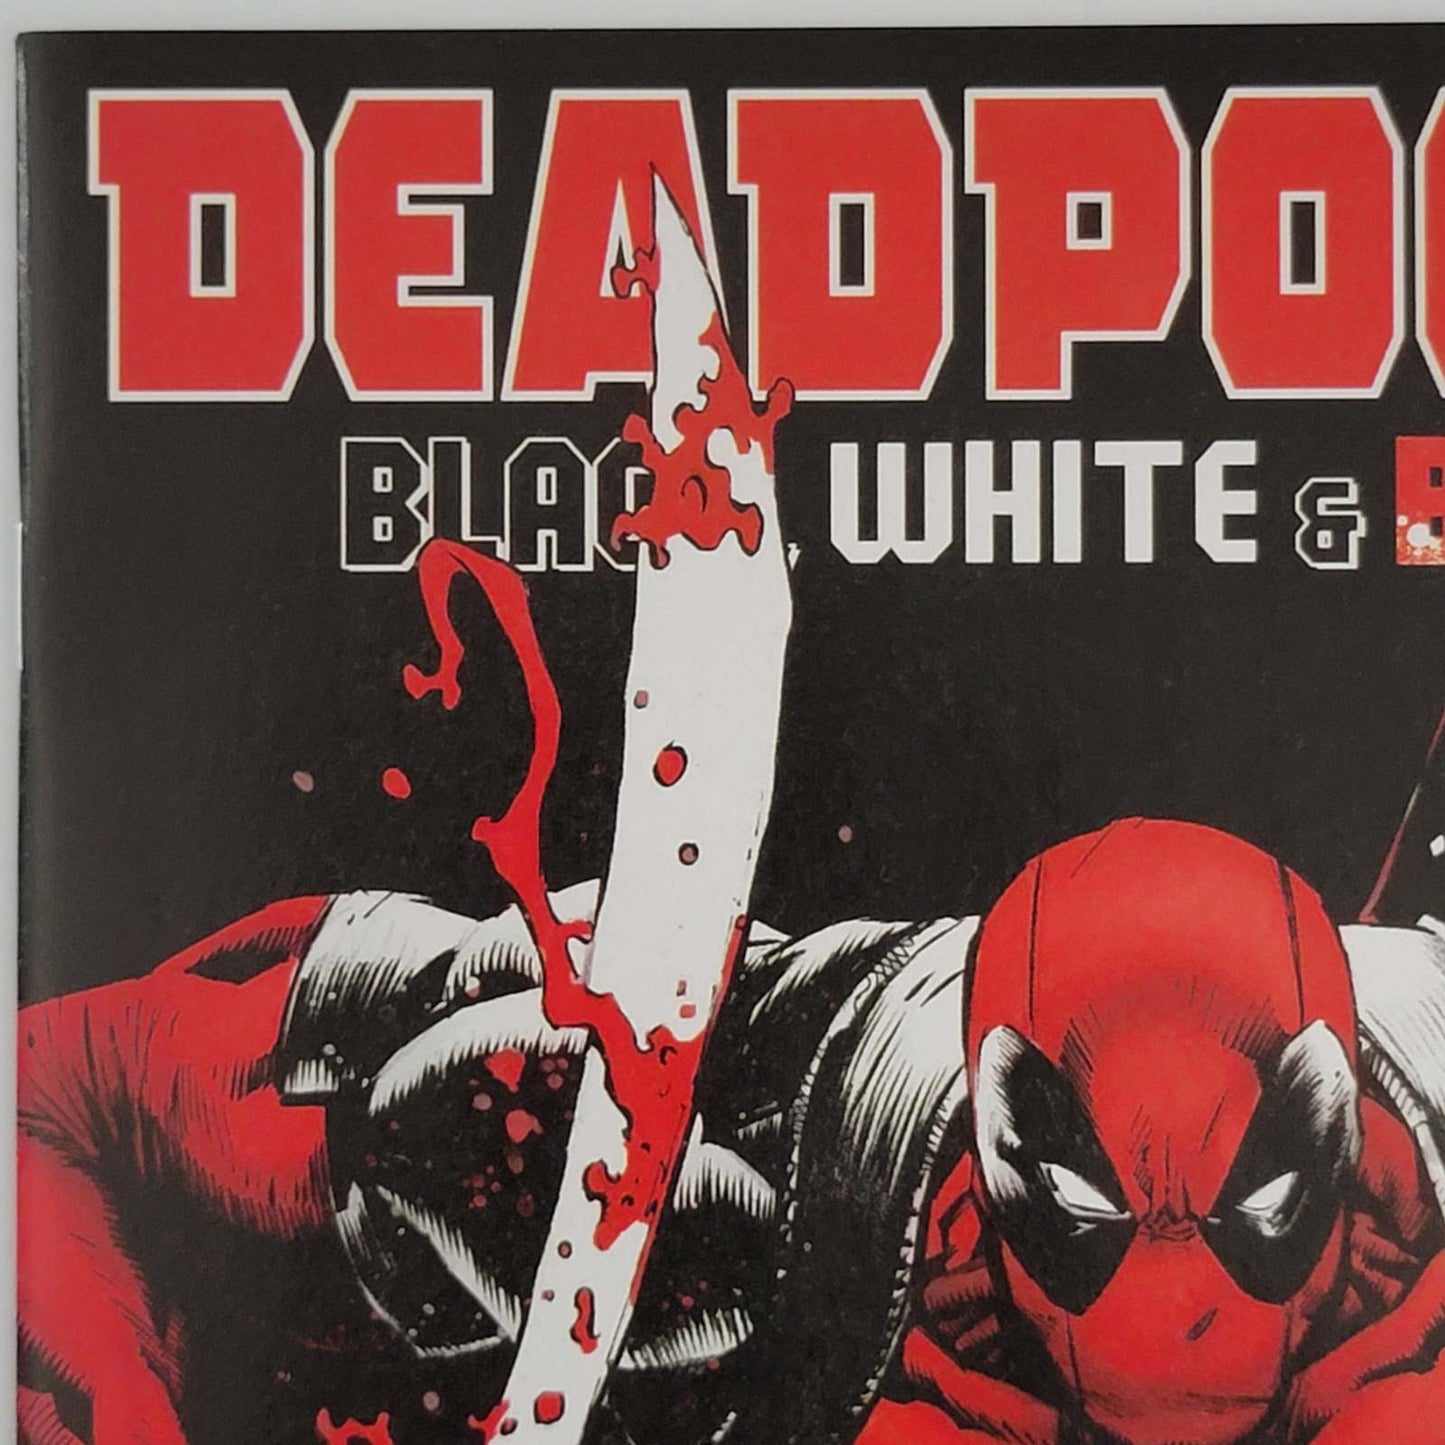 Deadpool: Black White & Blood #1  1:25 Stegman Cover